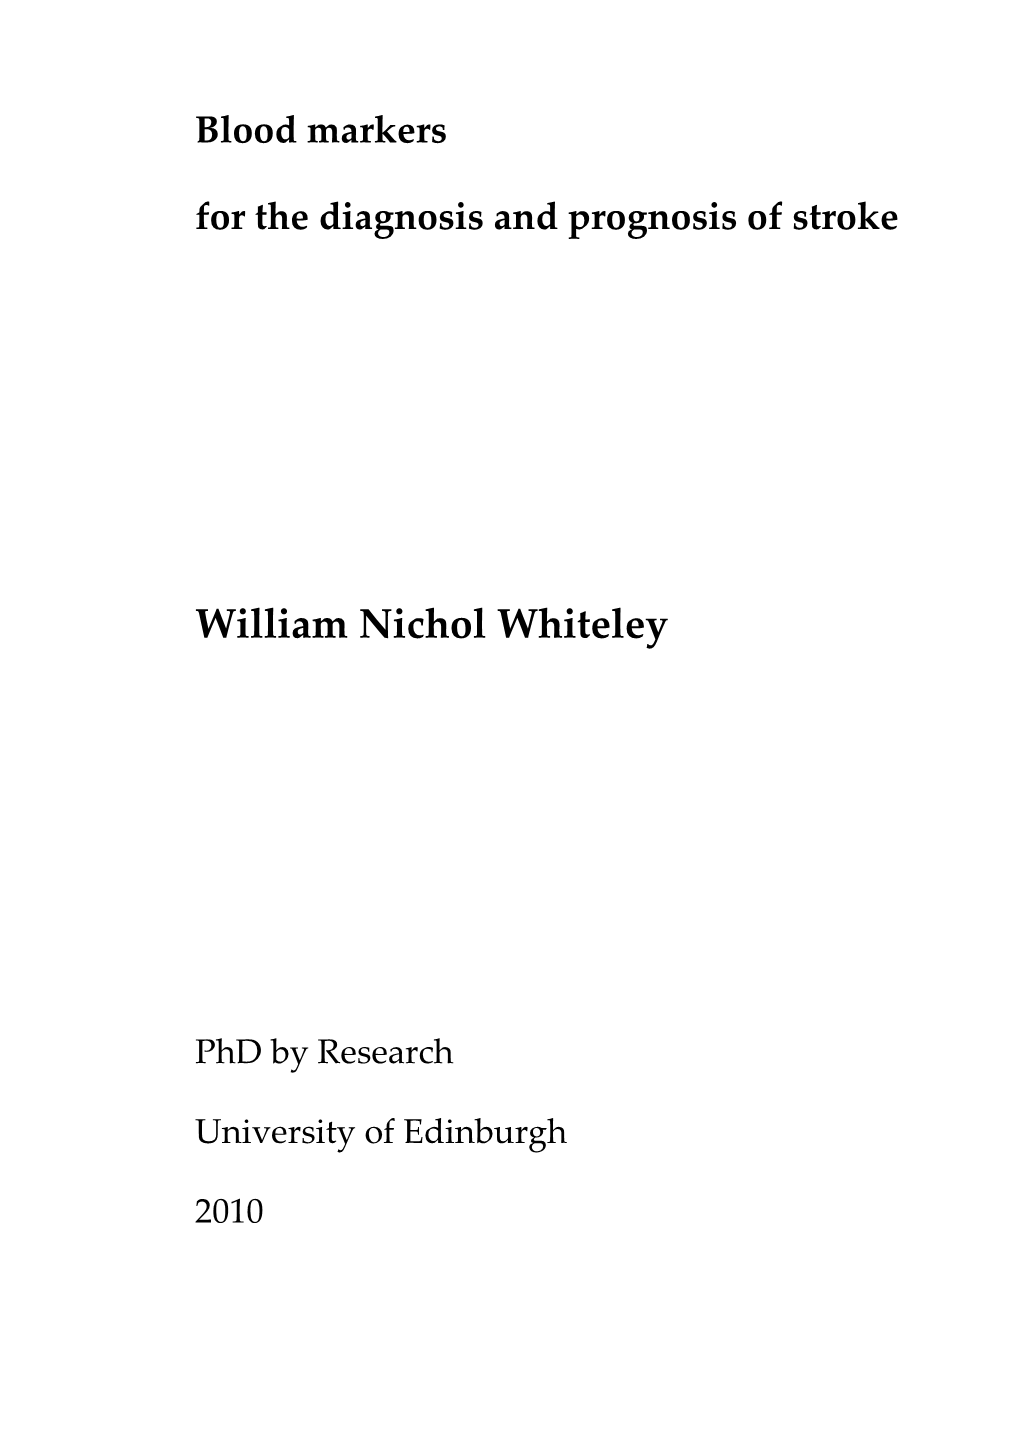 William Nichol Whiteley